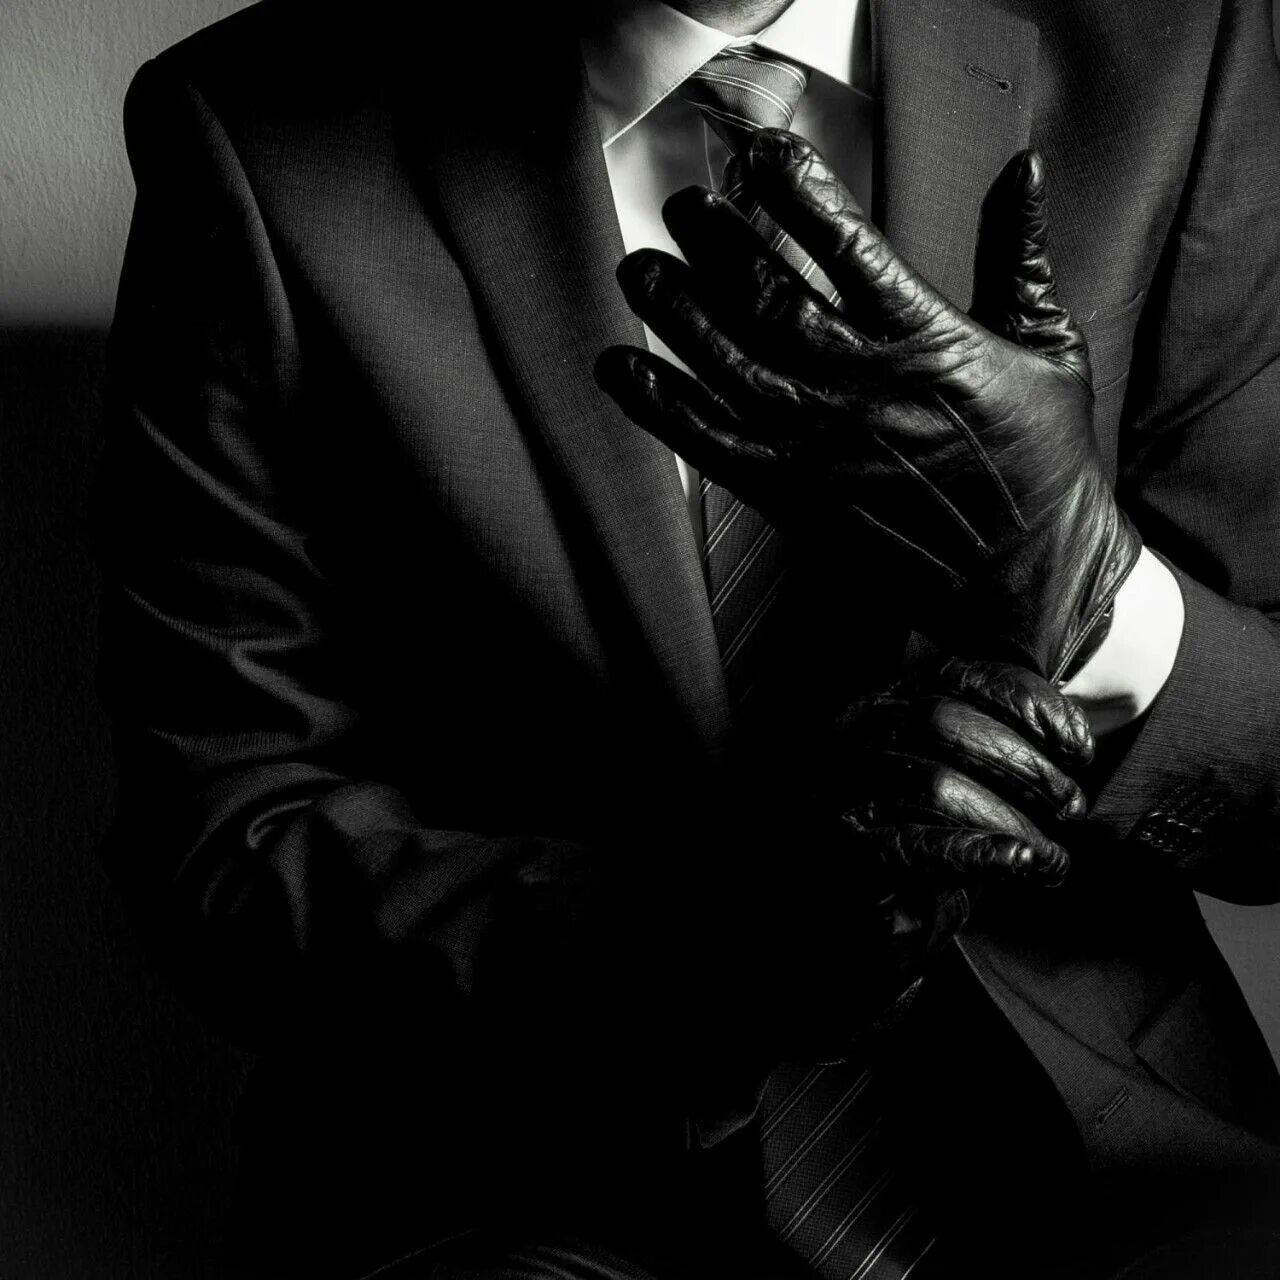 Темная Эстетика Дэдди. Мужчина Доминант. Мужская рука в костюме. Мужчина господин. Доминирование природа